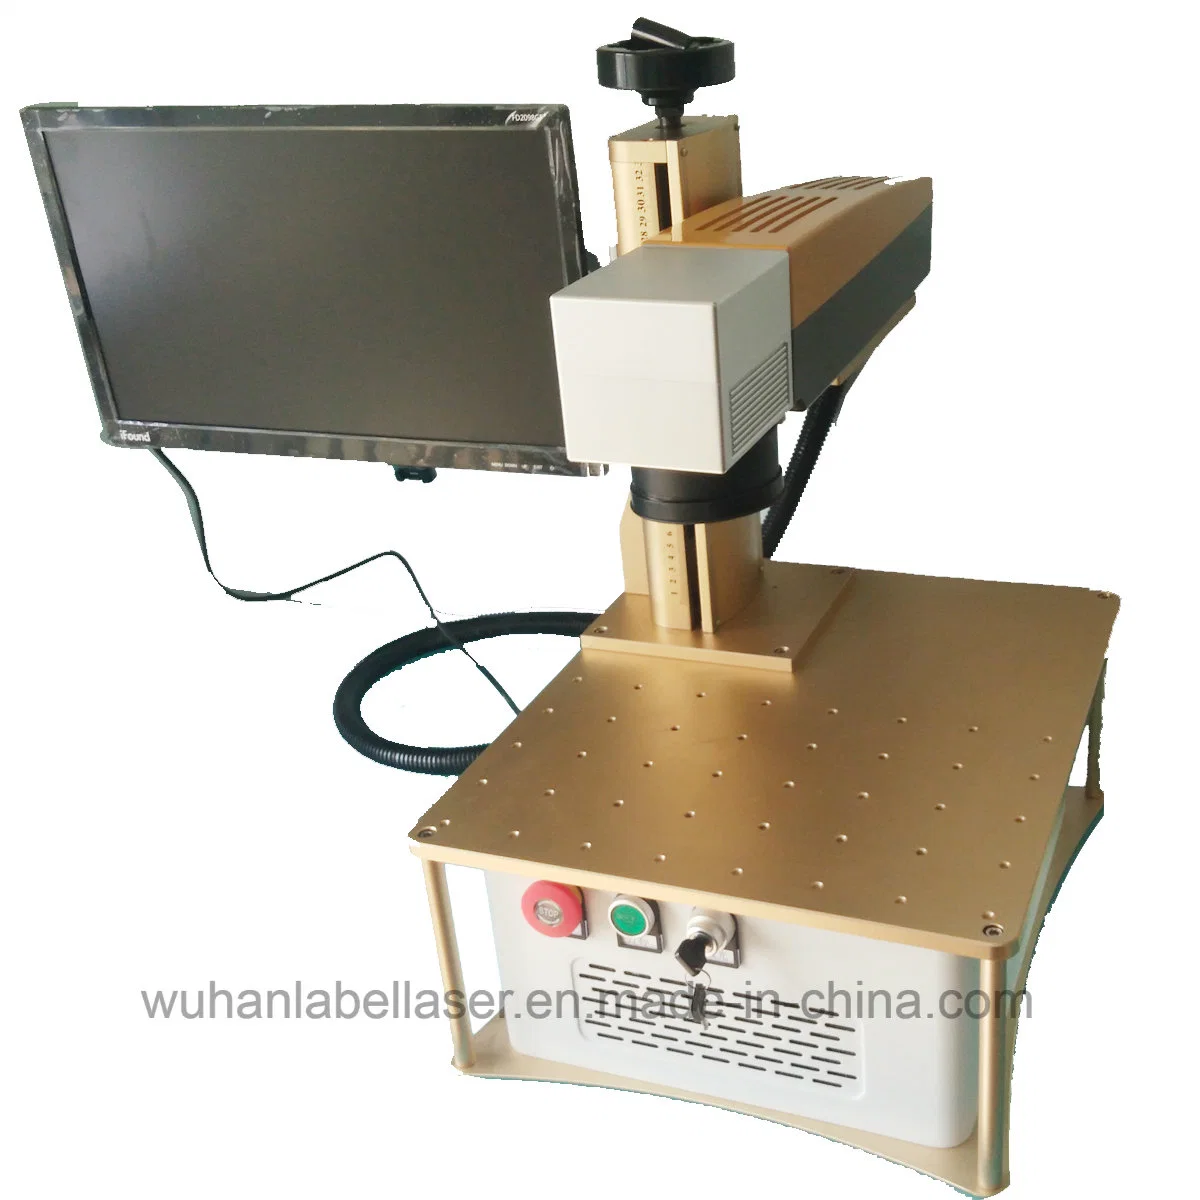 Optical Fiber Laser Marking Machine Laser Equipment Manufacturers in China